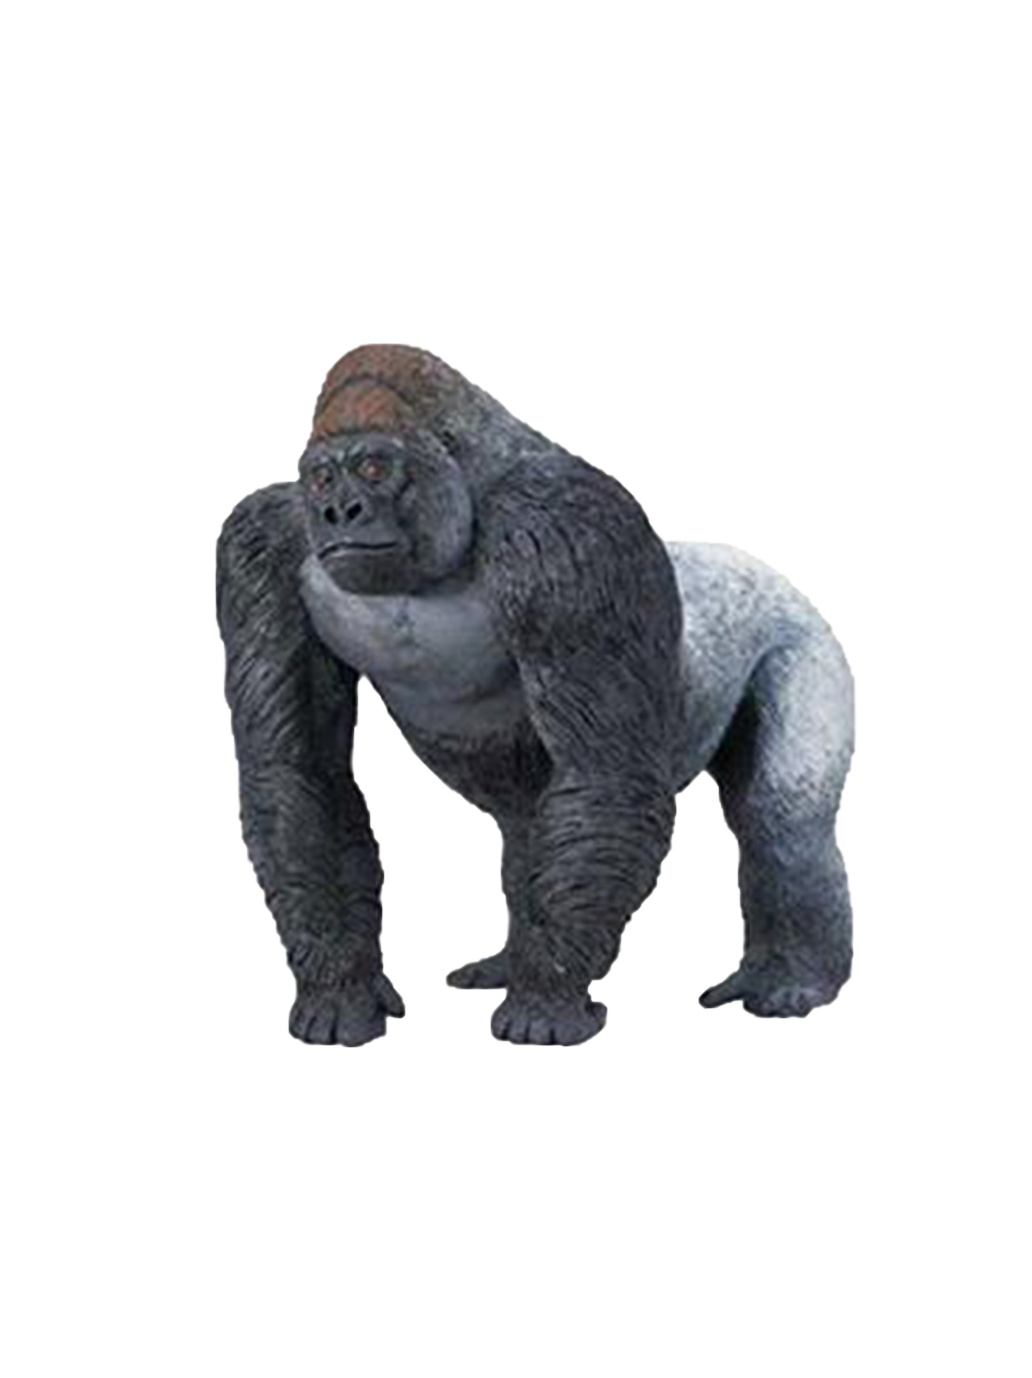 Figura de gorila grande